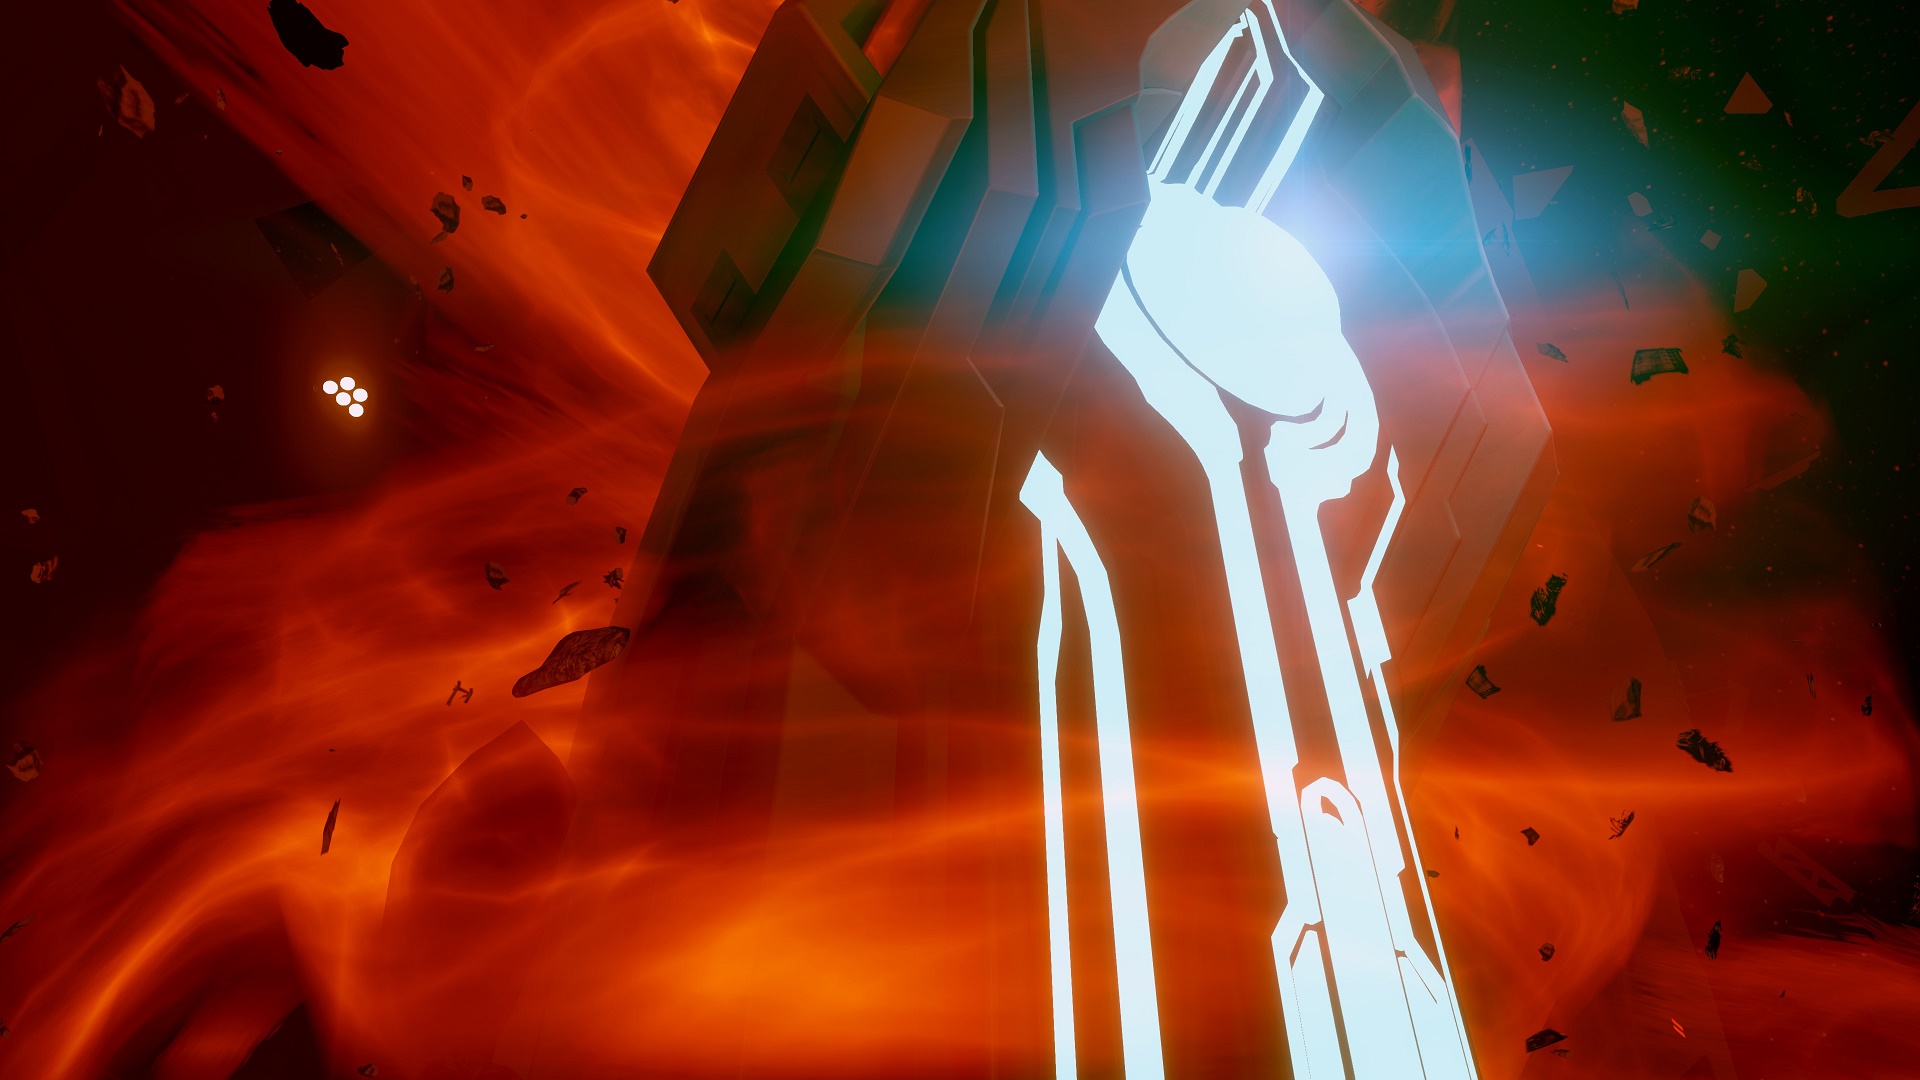 Halo 4 screenshot of the Composer